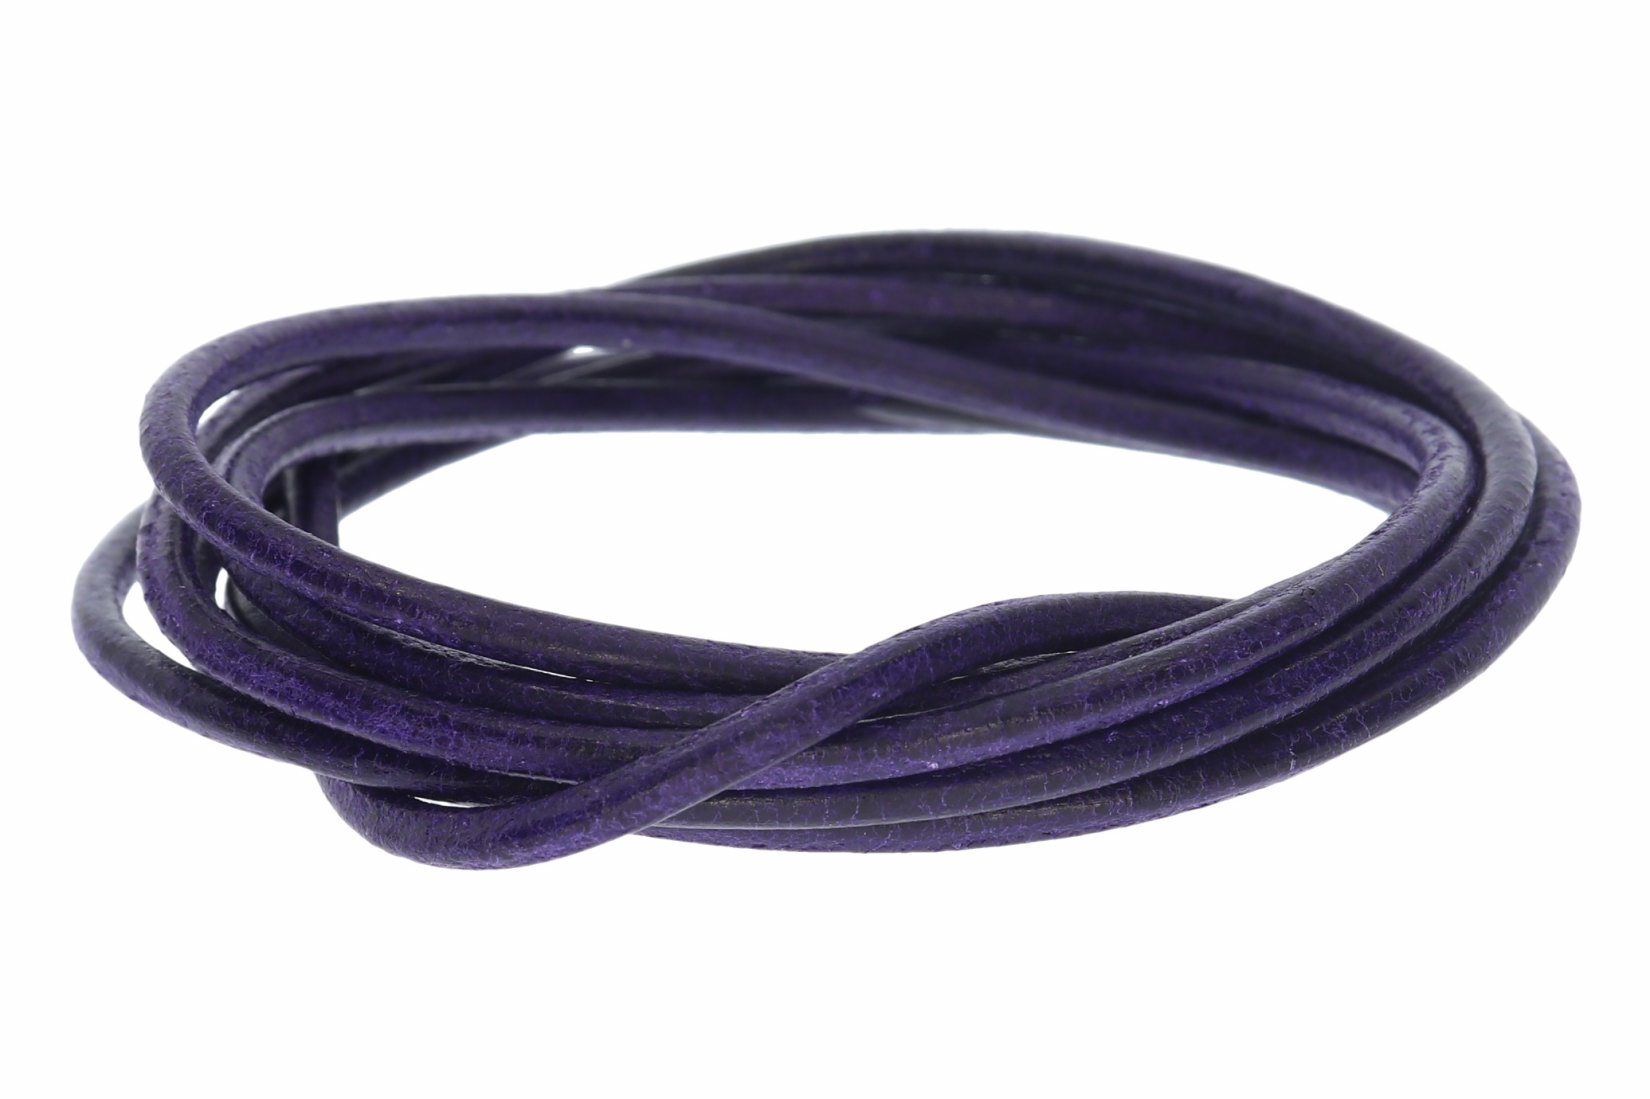 Lederband violett -  Lederbänder Lederriemen Lederschnur 2 mm Ø - 100cm L216